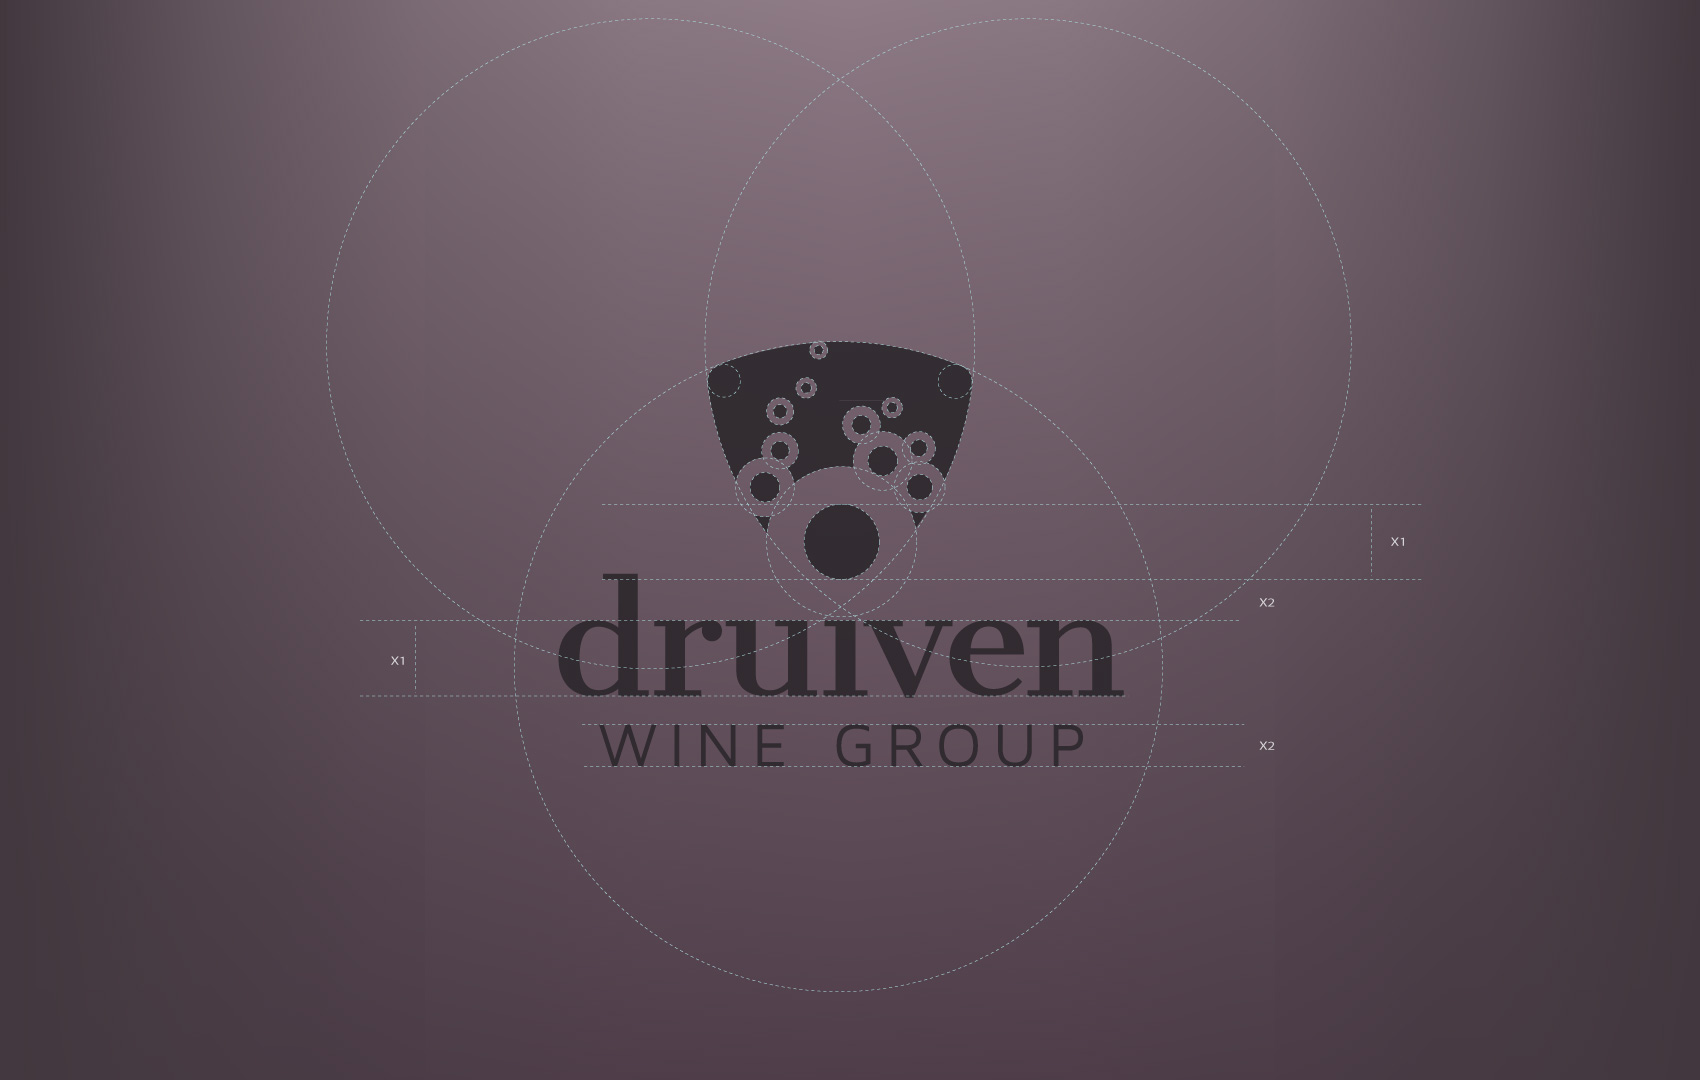 hibriden_druiven-idn-02